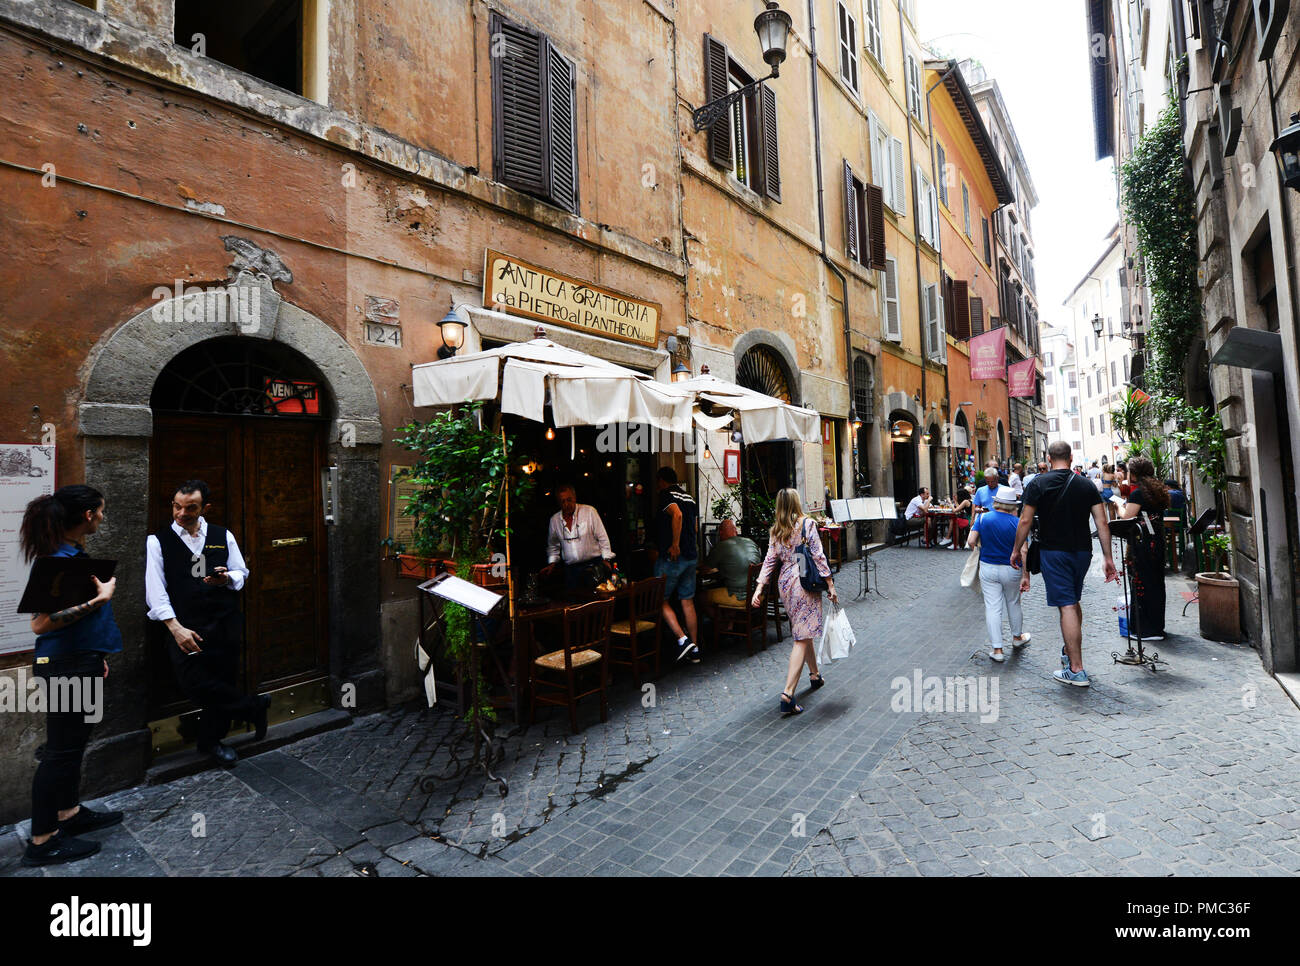 Pietro al Pantheon bar and restaurant on Via dei Pastini in Rome. Stock Photo